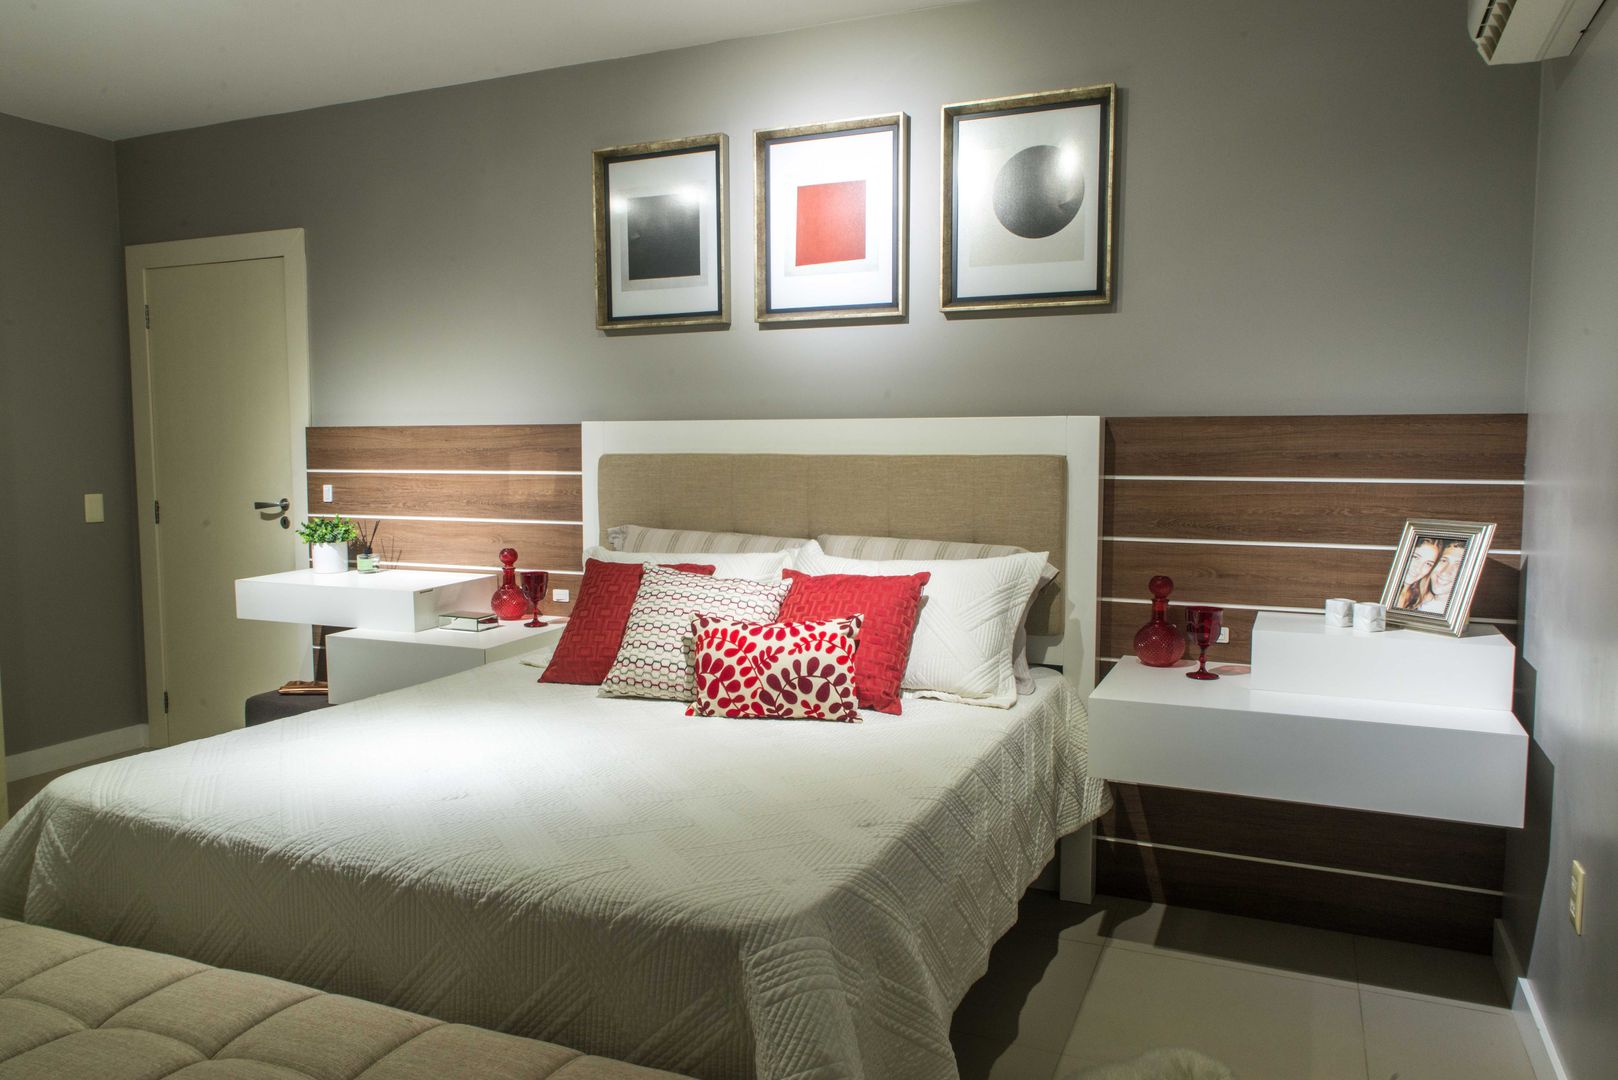 Suíte elegante, Revisite Revisite Modern style bedroom Concrete